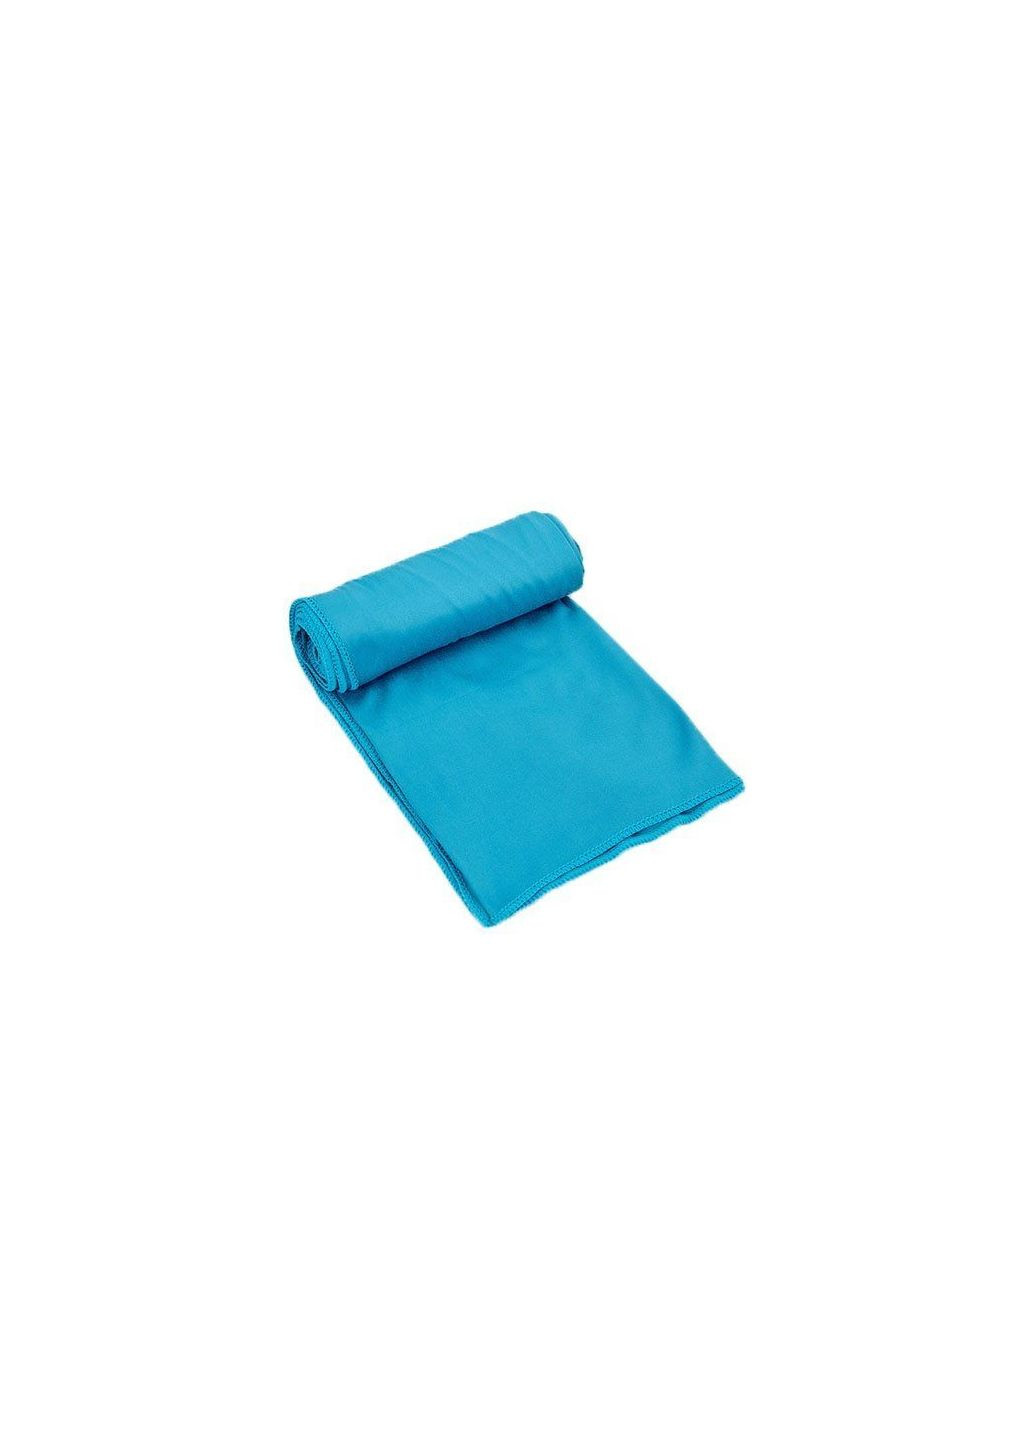 4monster полотенце спортивное fryfast синий (33622011) комбинированный производство - Китай